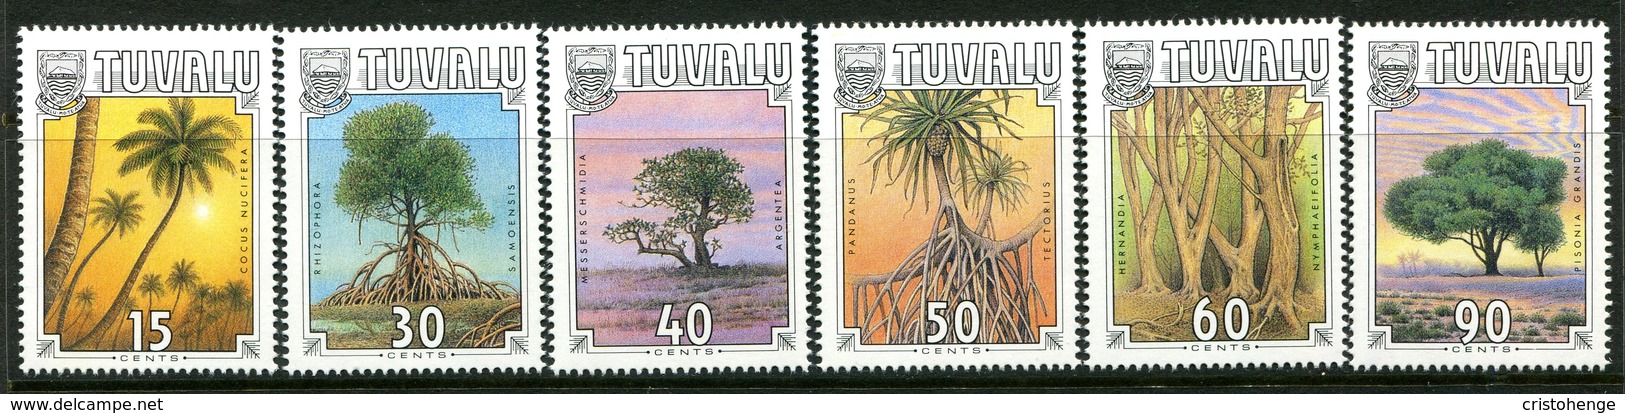 Tuvalu 1990 Tropical Trees Set MNH (SG 568-573) - Tuvalu